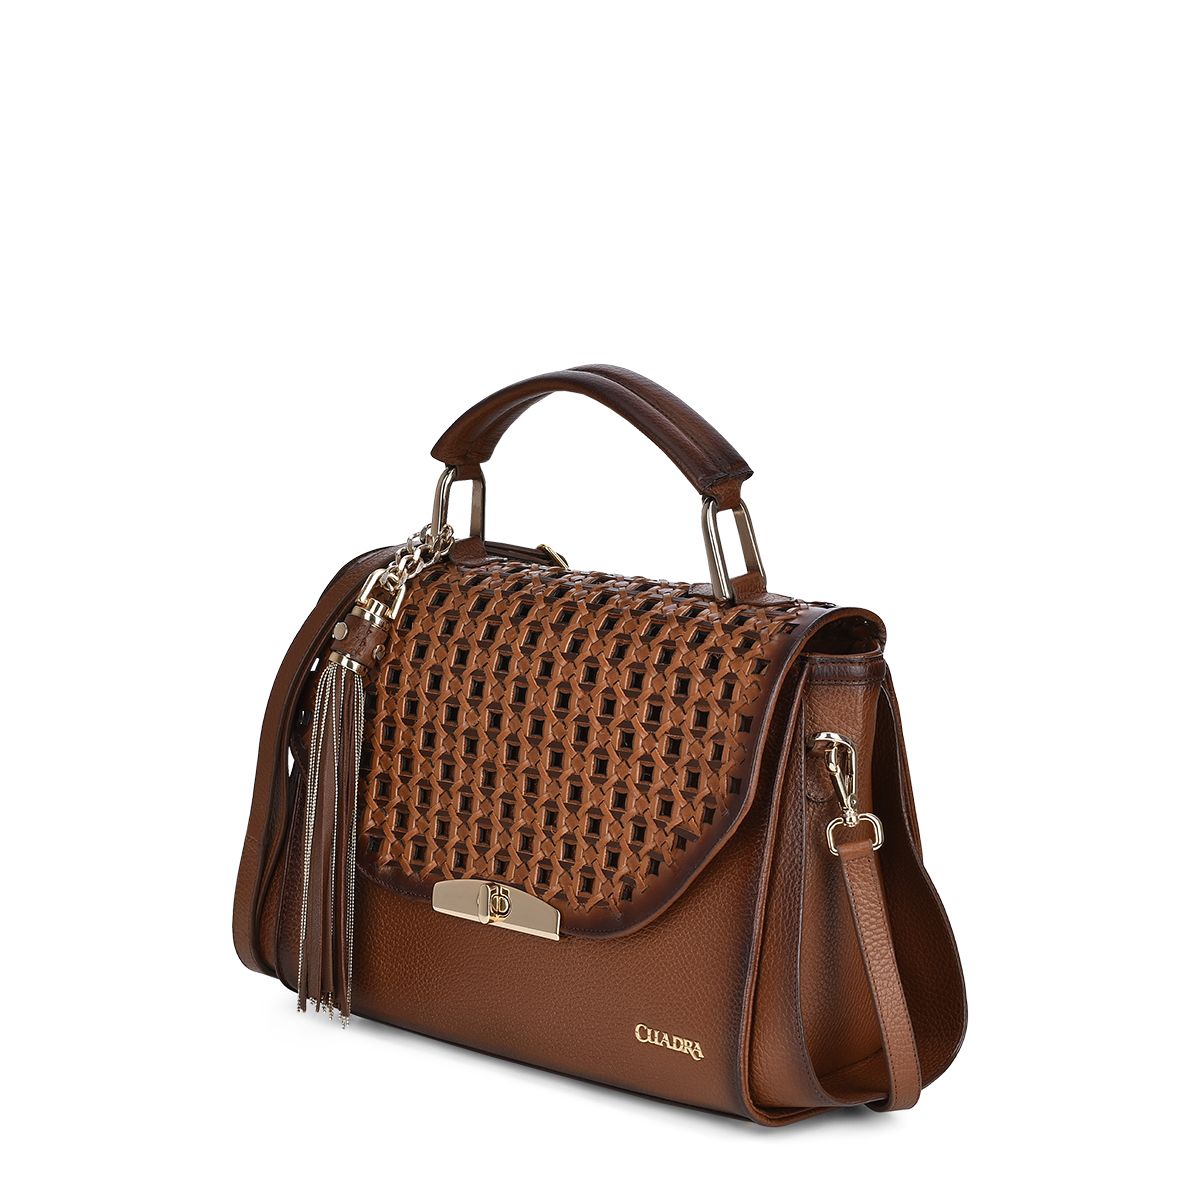 BOD32RS - Cuadra honey casual fashion leather shoulder bag for women-Kuet.us